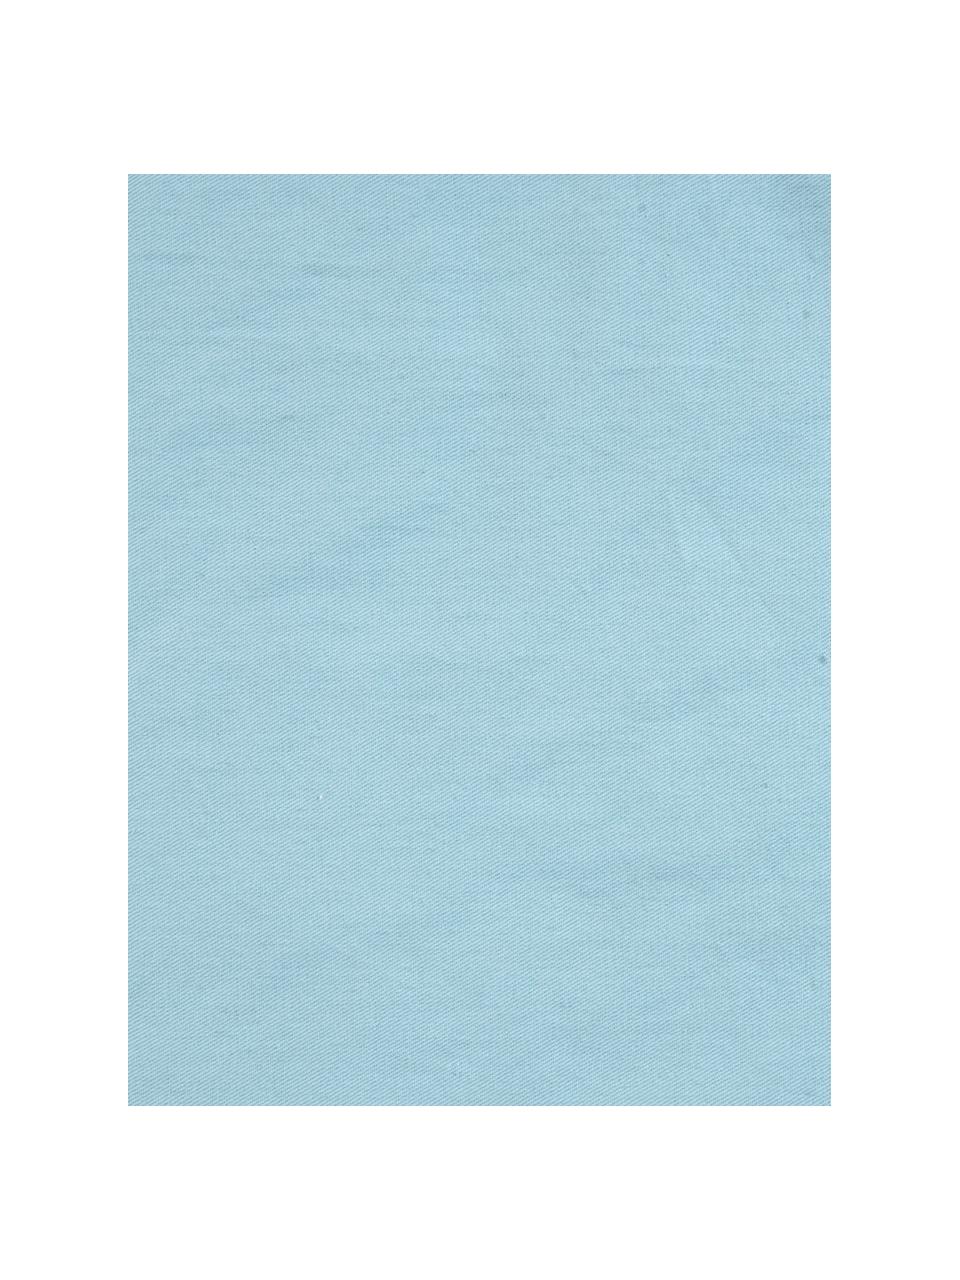 Baumwoll-Kissenhülle Reef mit getuftetem Motiv, 100% Baumwolle, Hellblau, Weiß, B 40 x L 40 cm